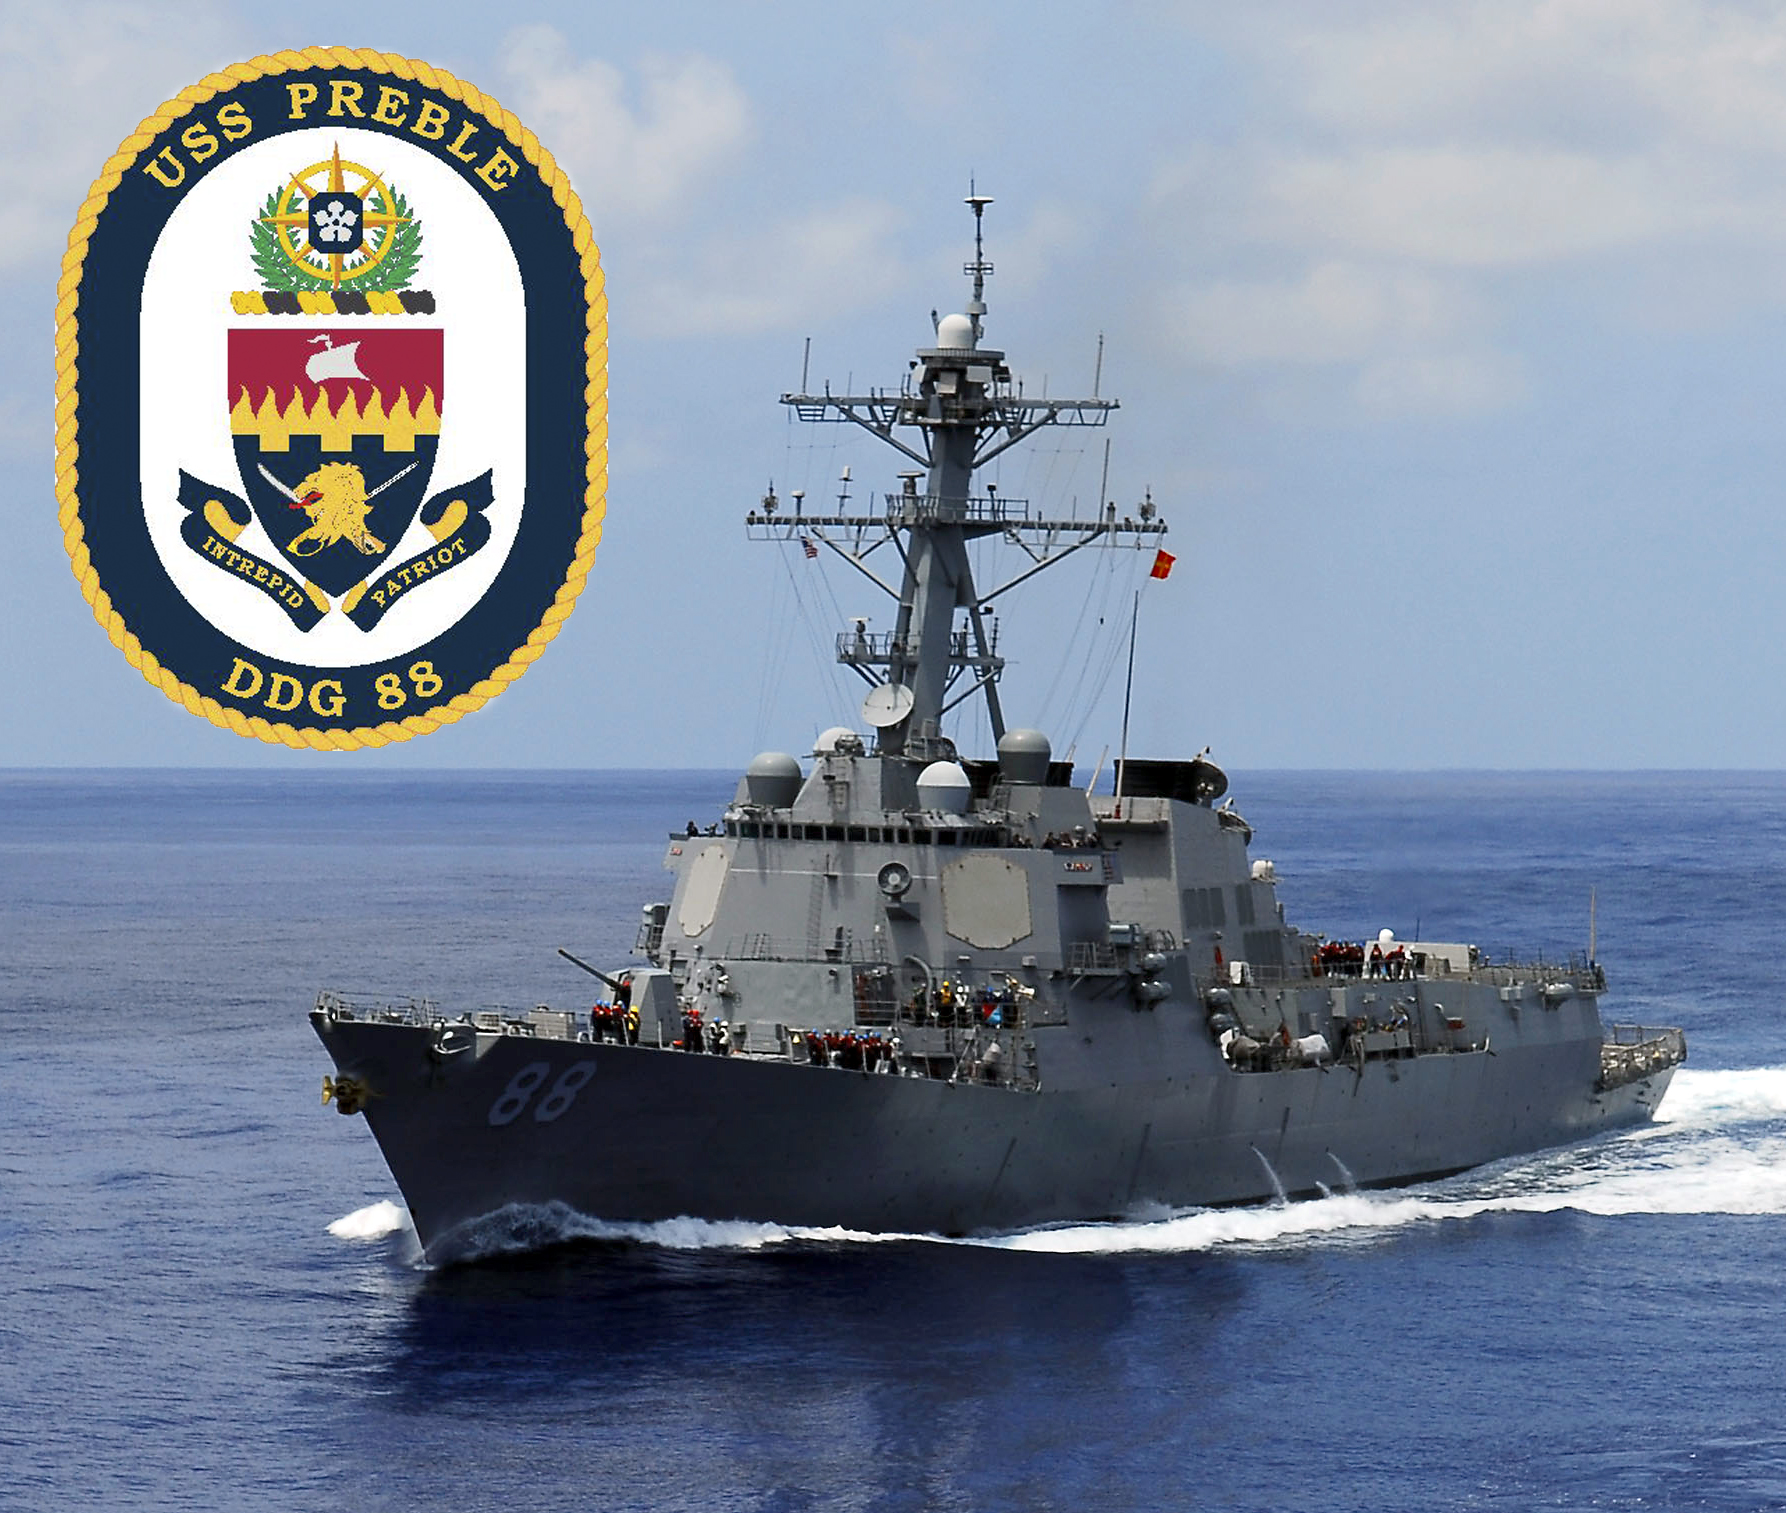 USS PREBLE DDG-88 Bild und Grafik: U.S. Navy